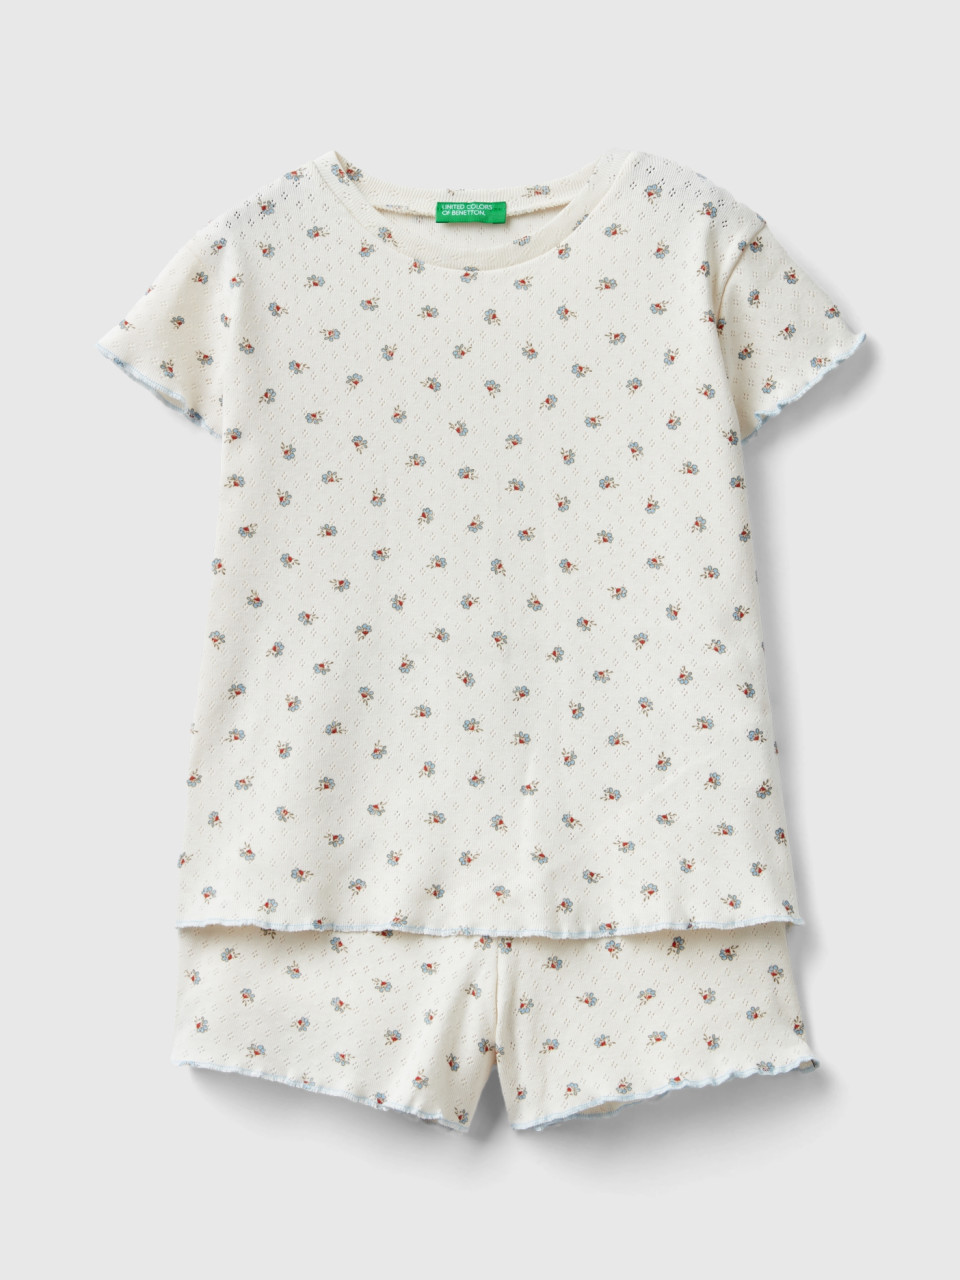 Benetton, 100% Cotton Patterned Pyjamas, Creamy White, Kids